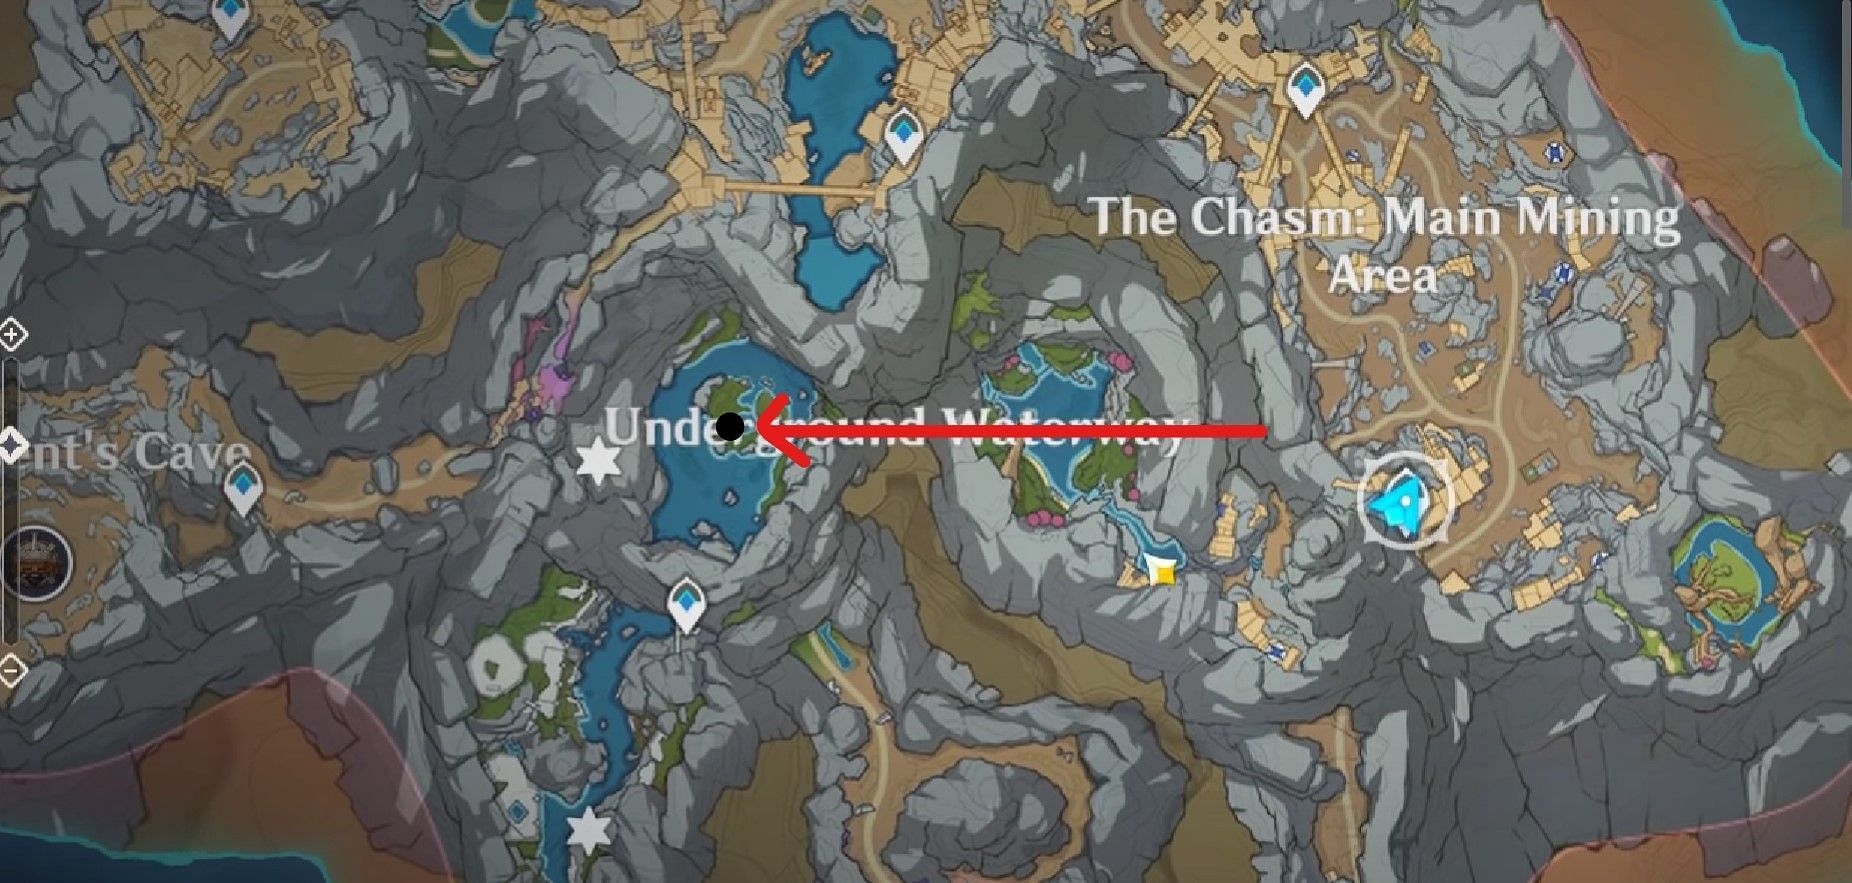 Edgetho&#039;s location in The Chasm: Underground Mines (Image via HoYoverse)